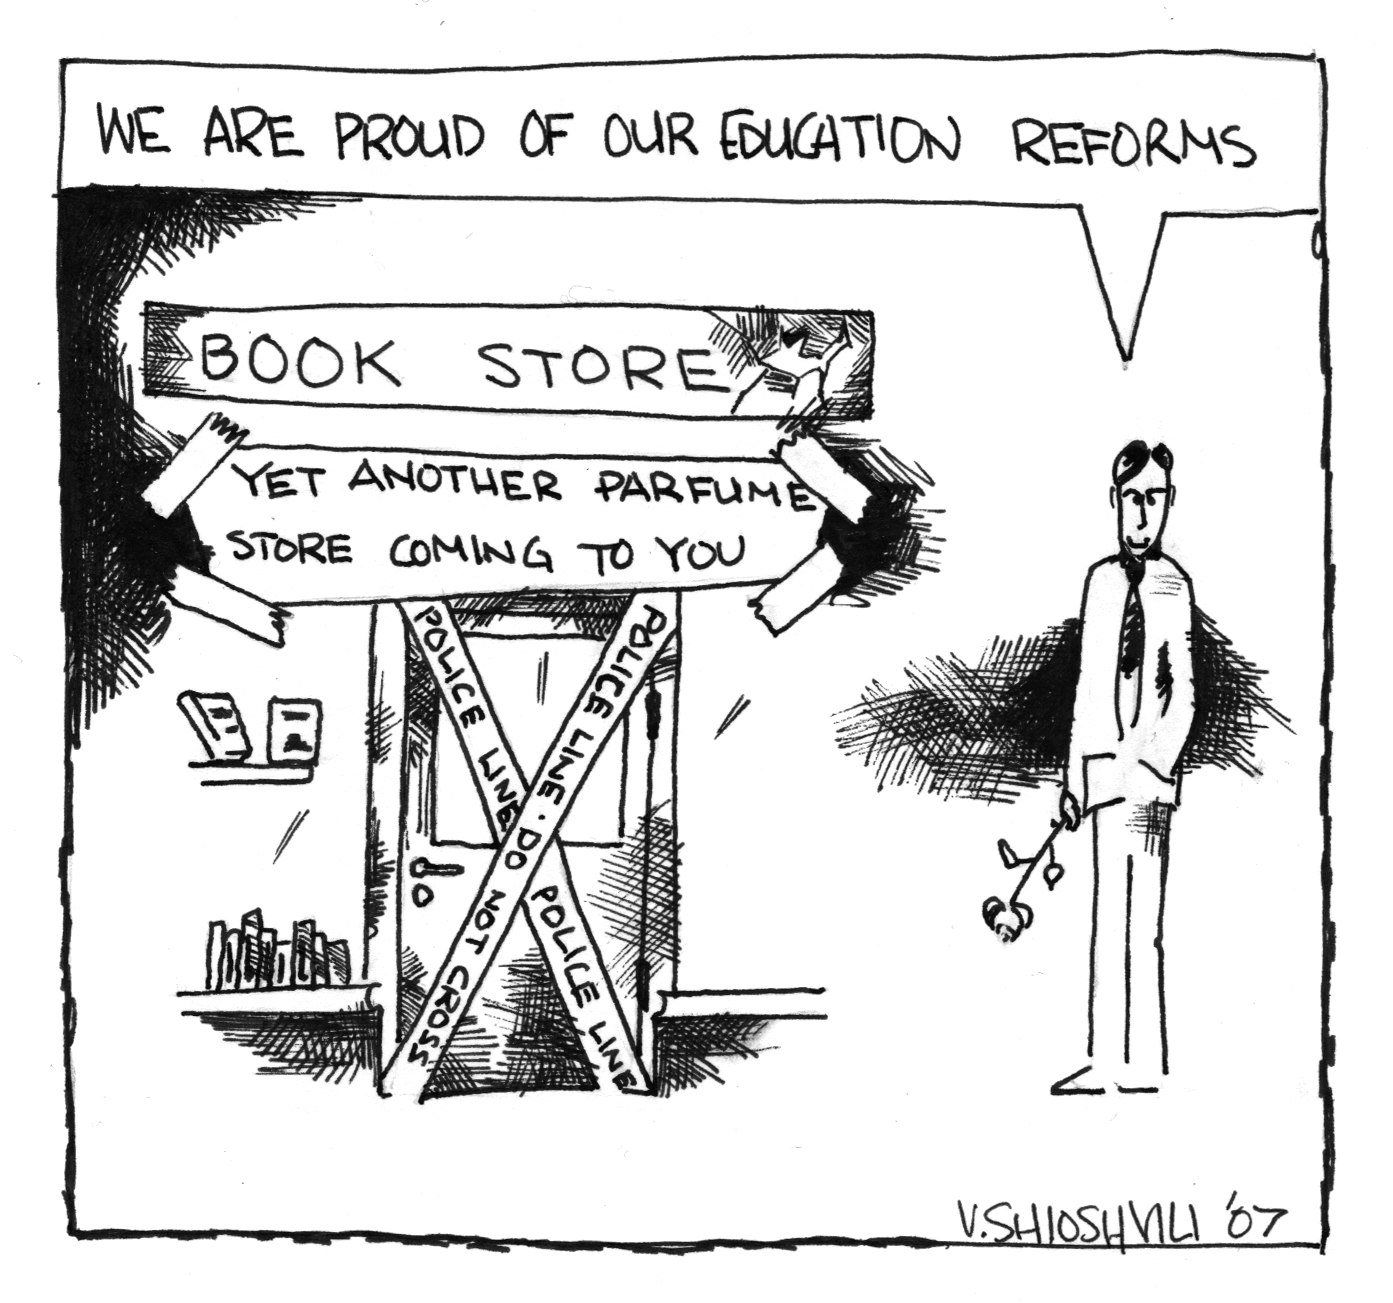 [education+reforms.jpg]